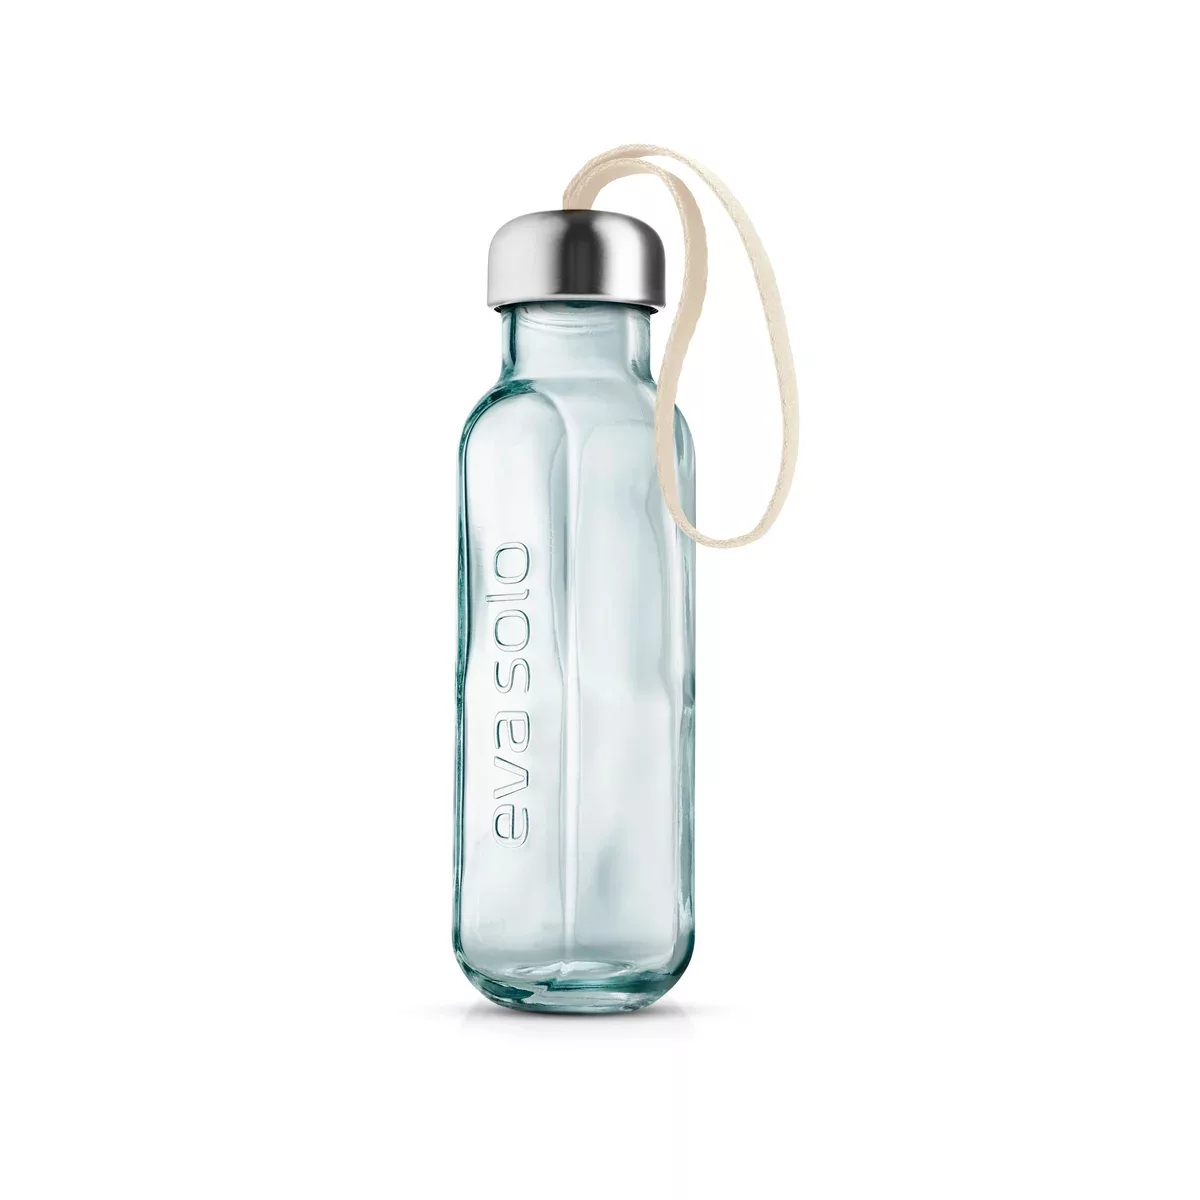 Trinkflasche Recycled glas transparent / 0,5 L - Recycling-Glas - Eva Solo günstig online kaufen